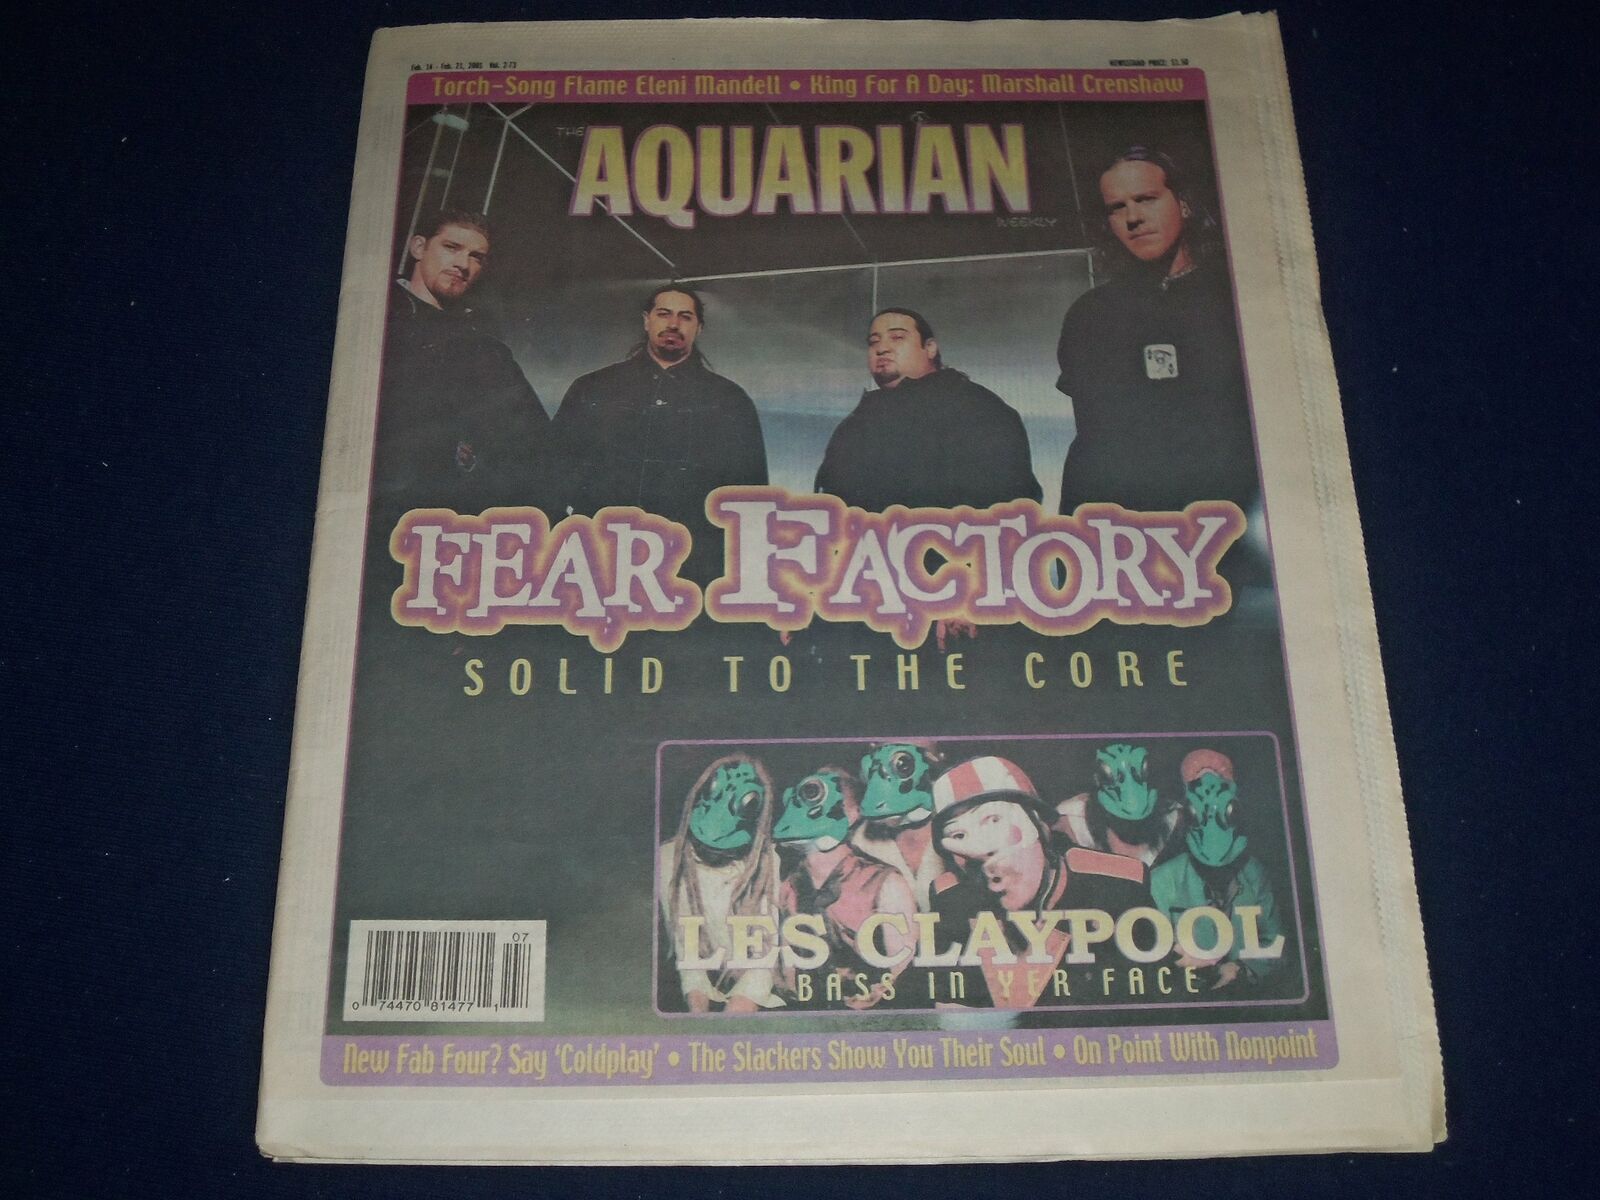 2001 FEBRUARY 14-21 AQUARIAN WEEKLY NEWSPAPER - FEAR FACTORY COVER - J 1170